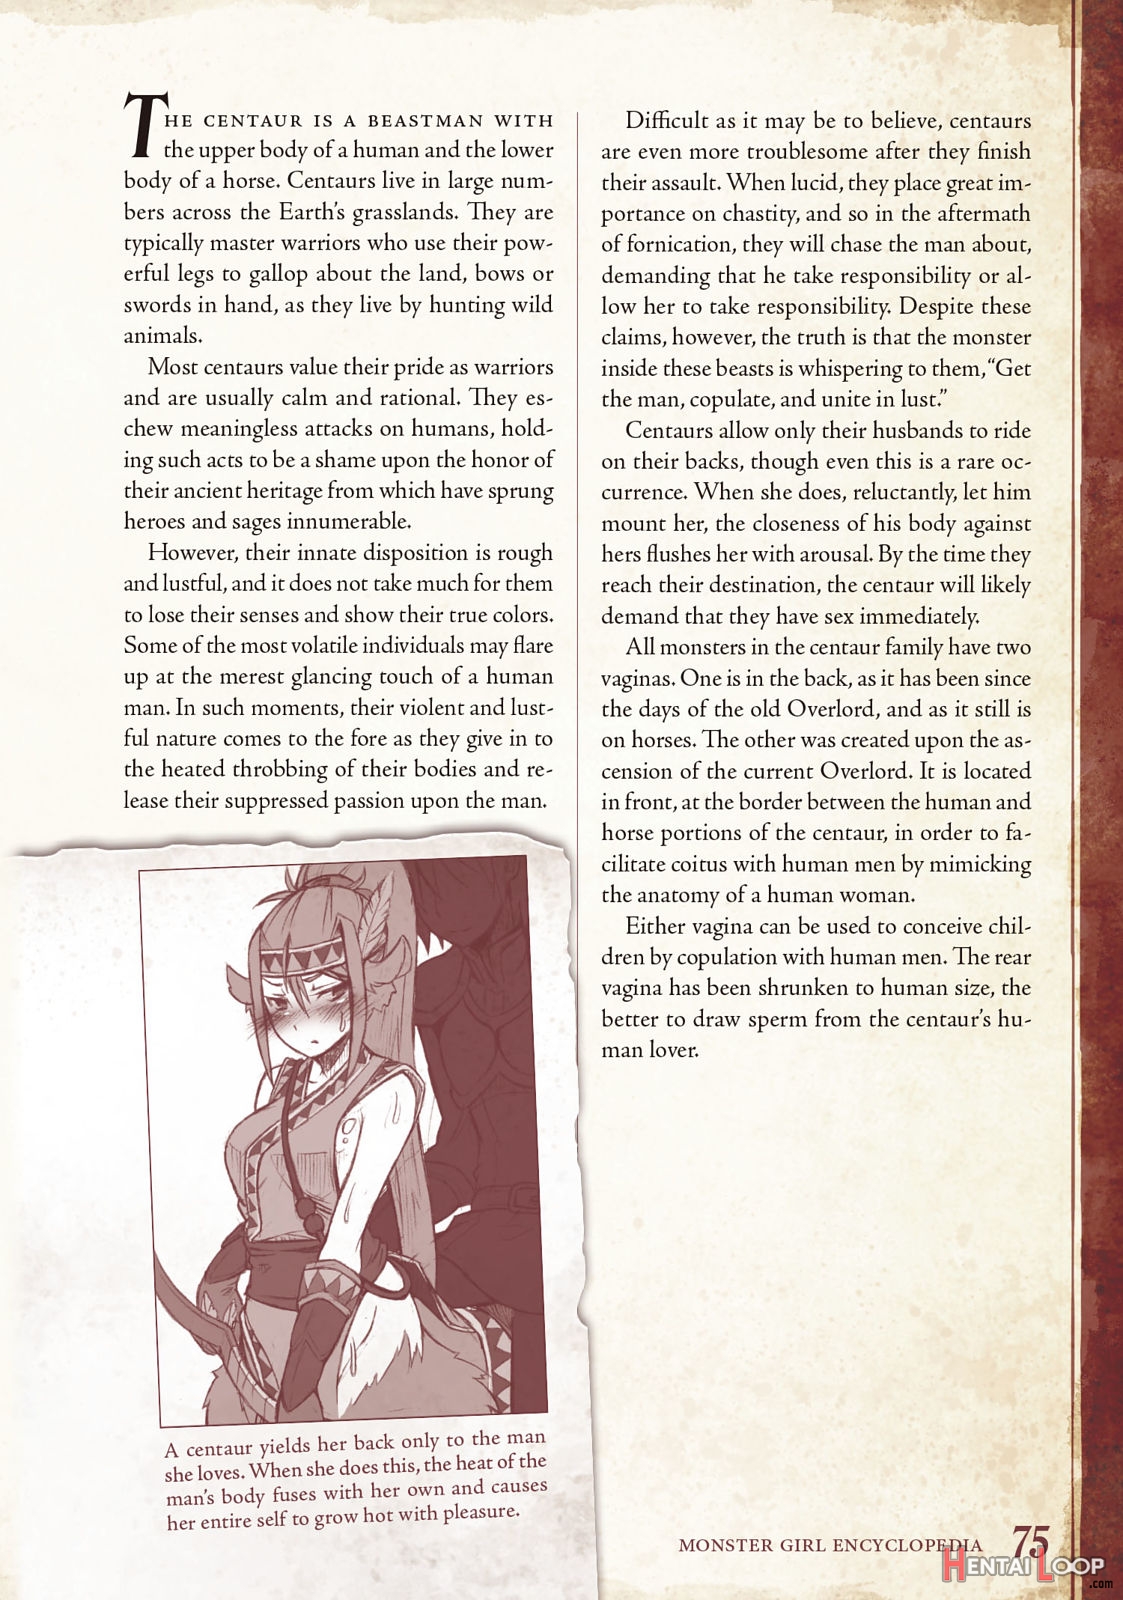 Monster Girl Encyclopedia Vol. 1 page 76